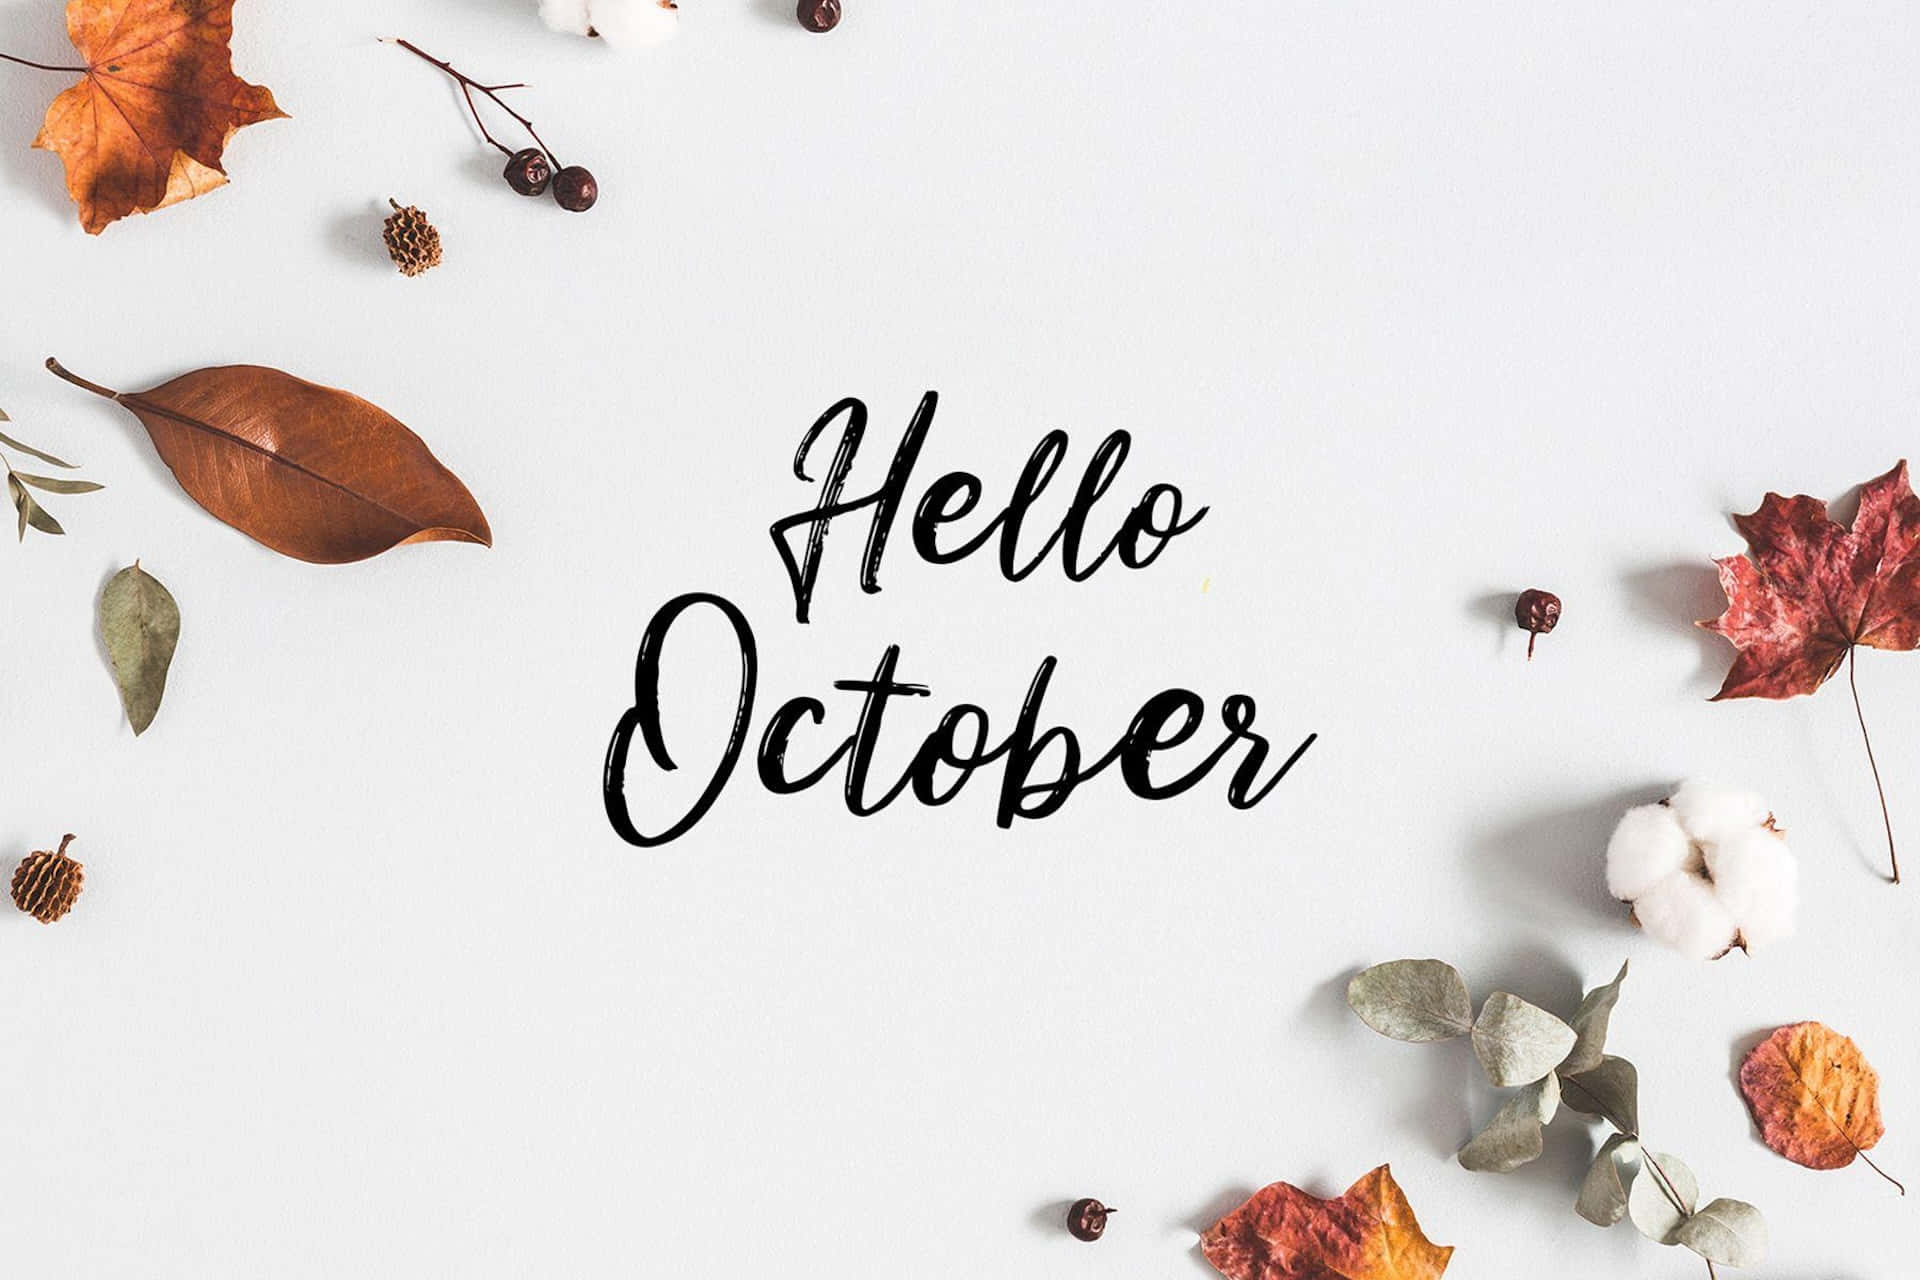 Hello October Autumn Greeting Wallpaper